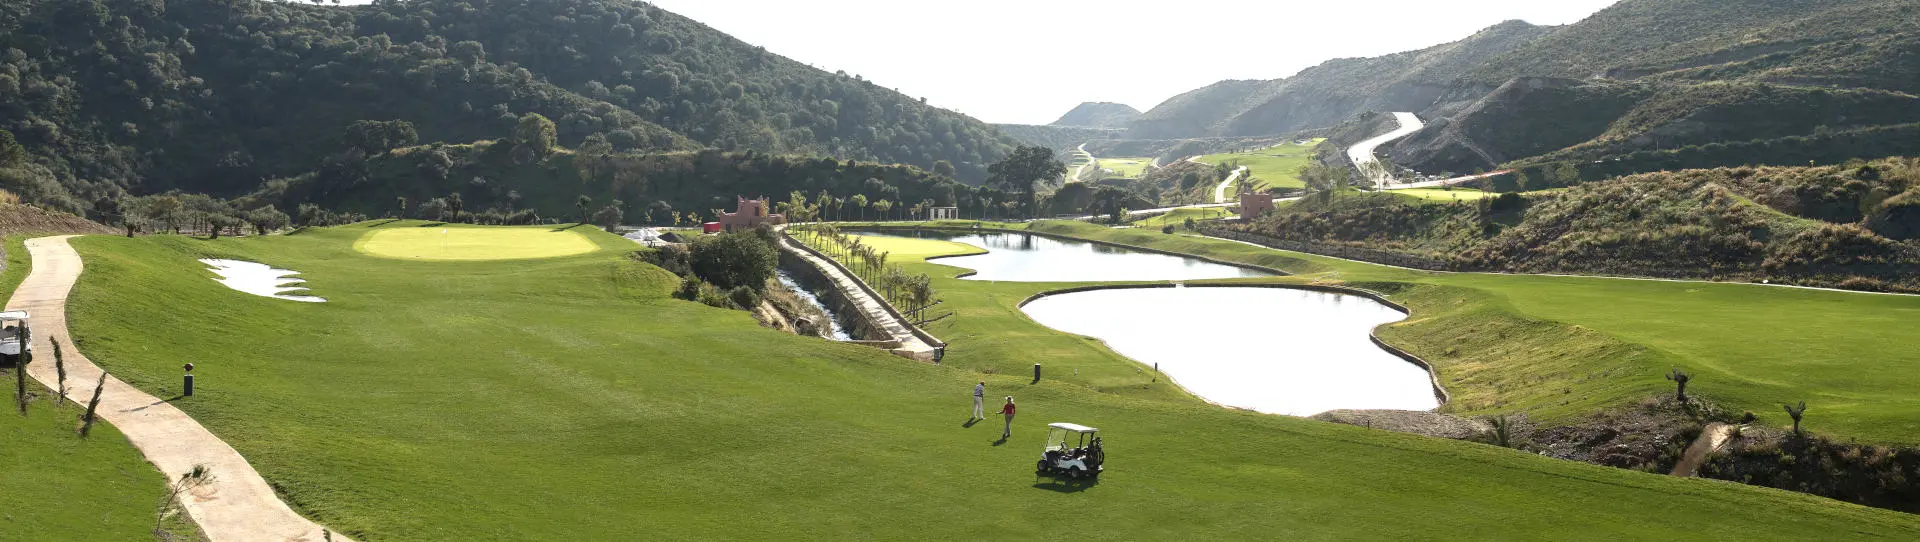 Spain Golf Driving Range - Villapadierna Golf Club - Photo 1